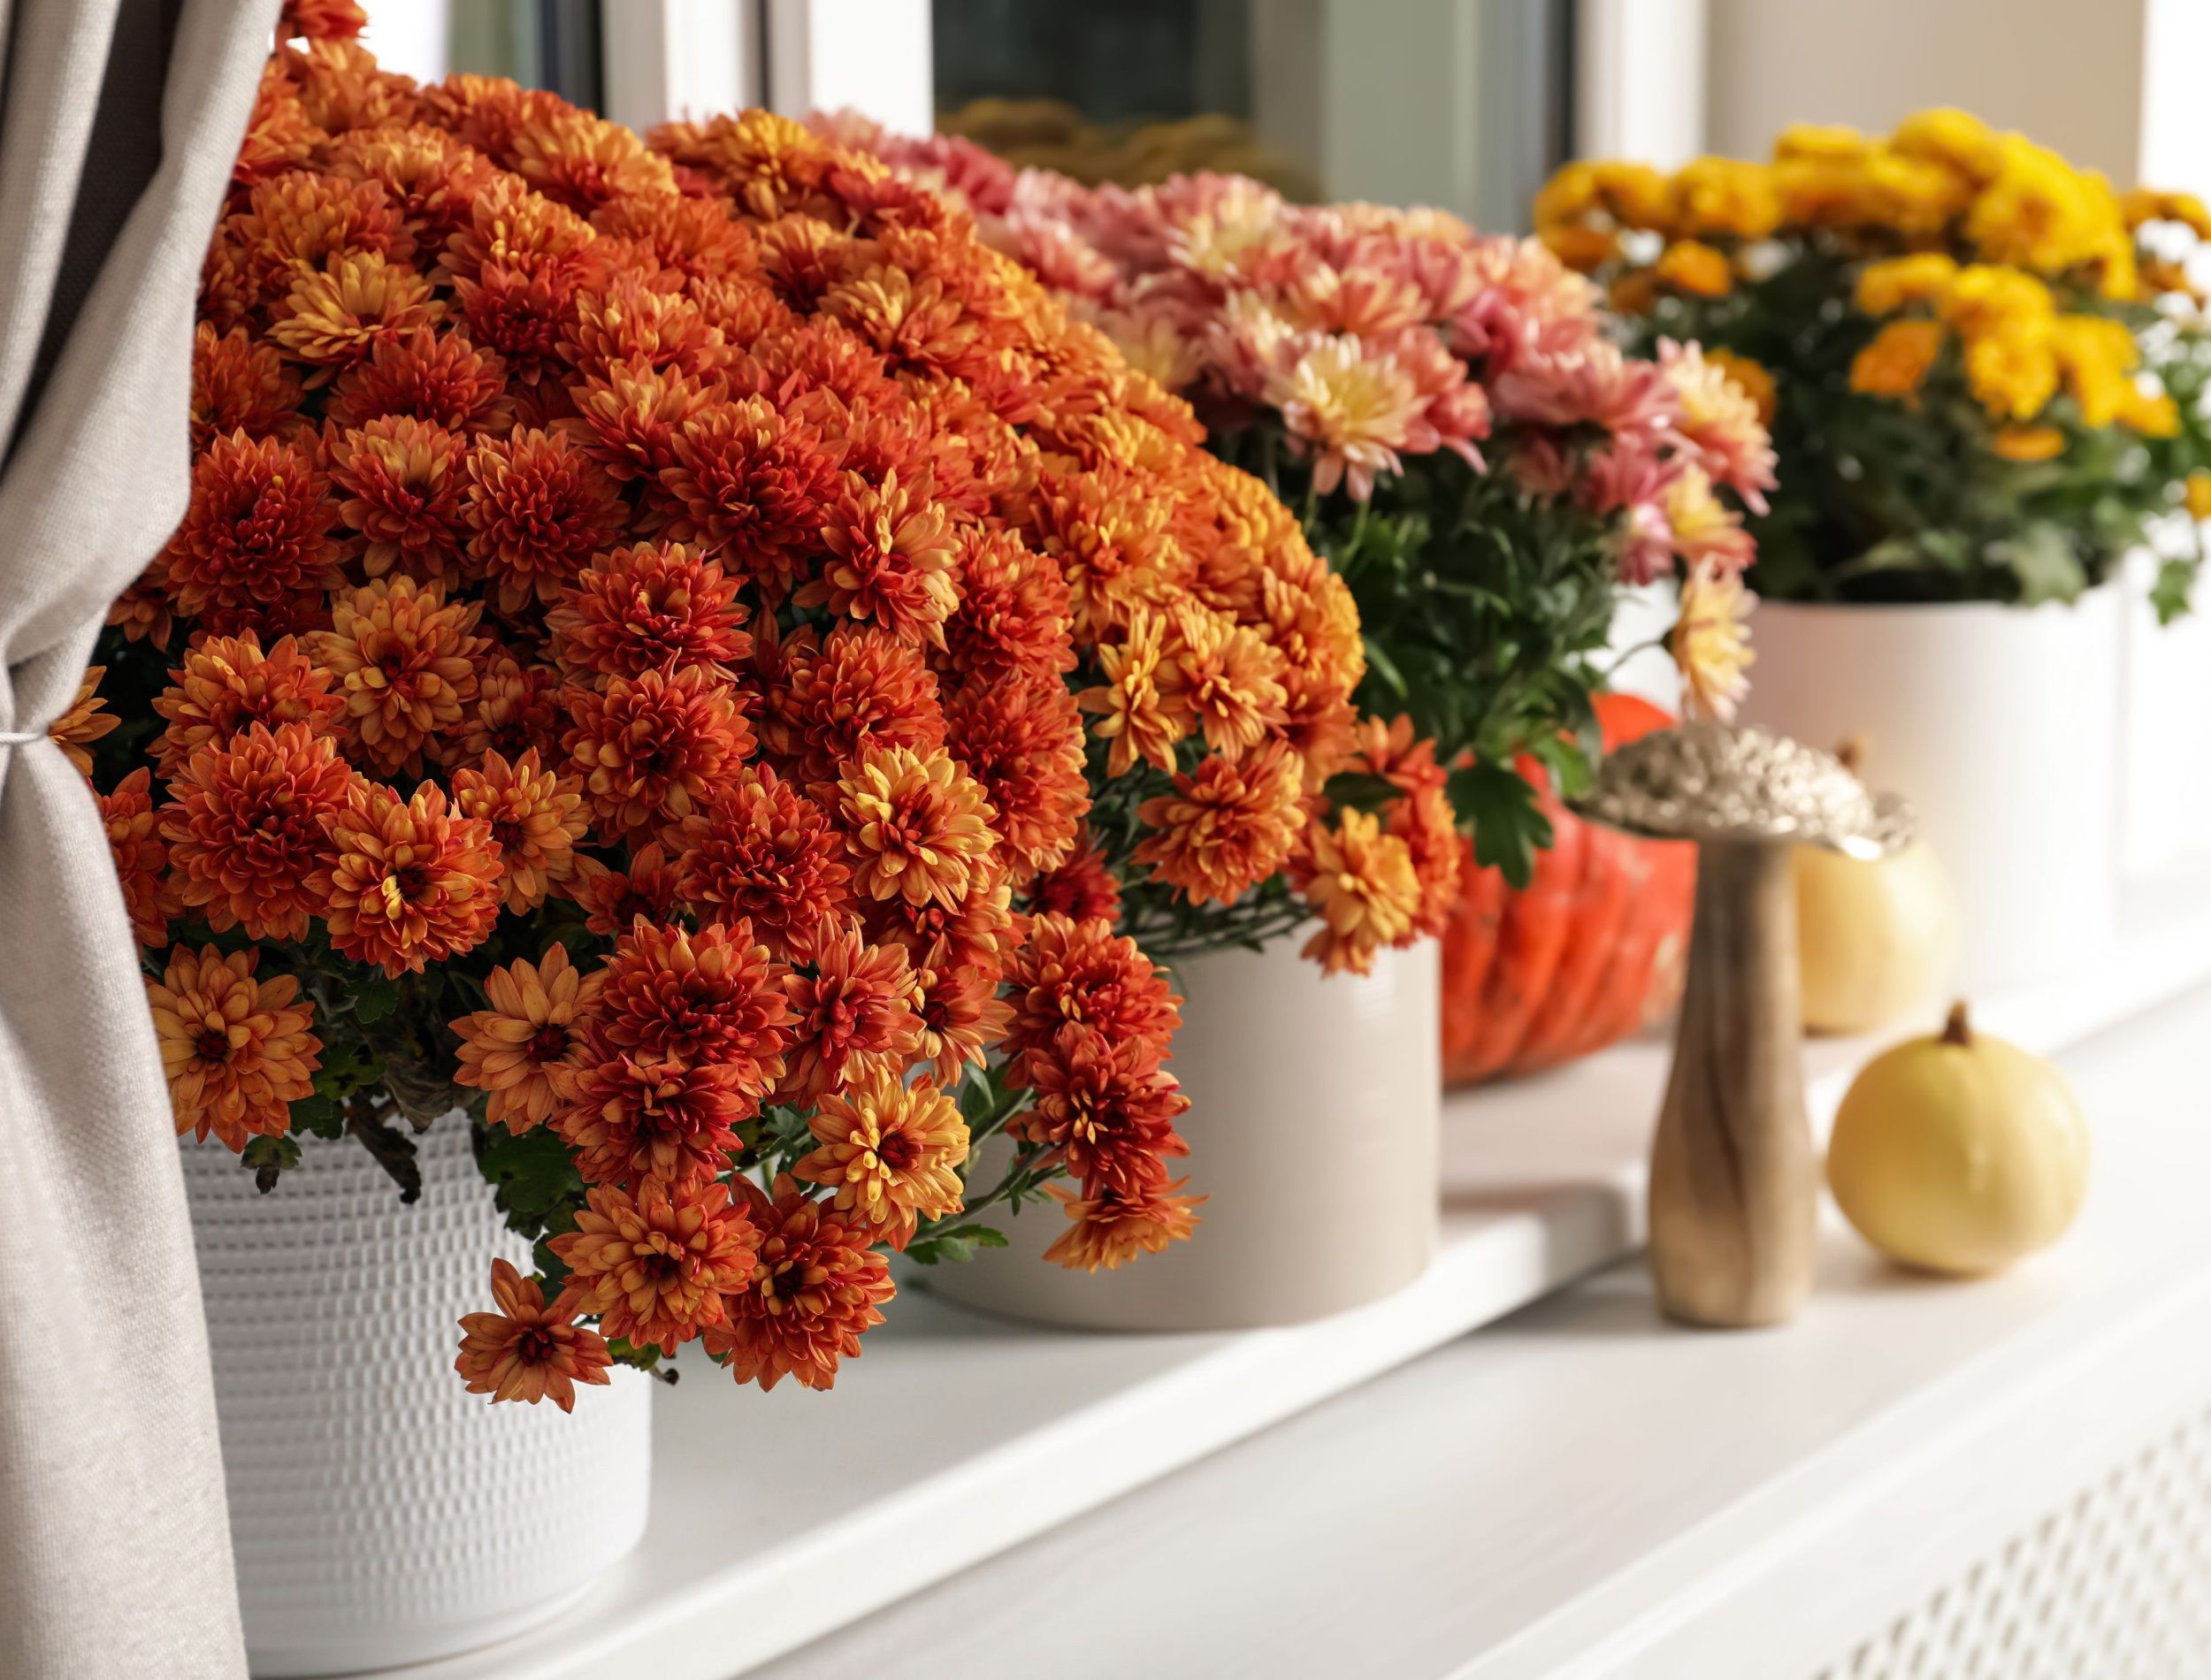 Beautiful potted chrysanthemum flowers and pumpkins on windowsill indoors